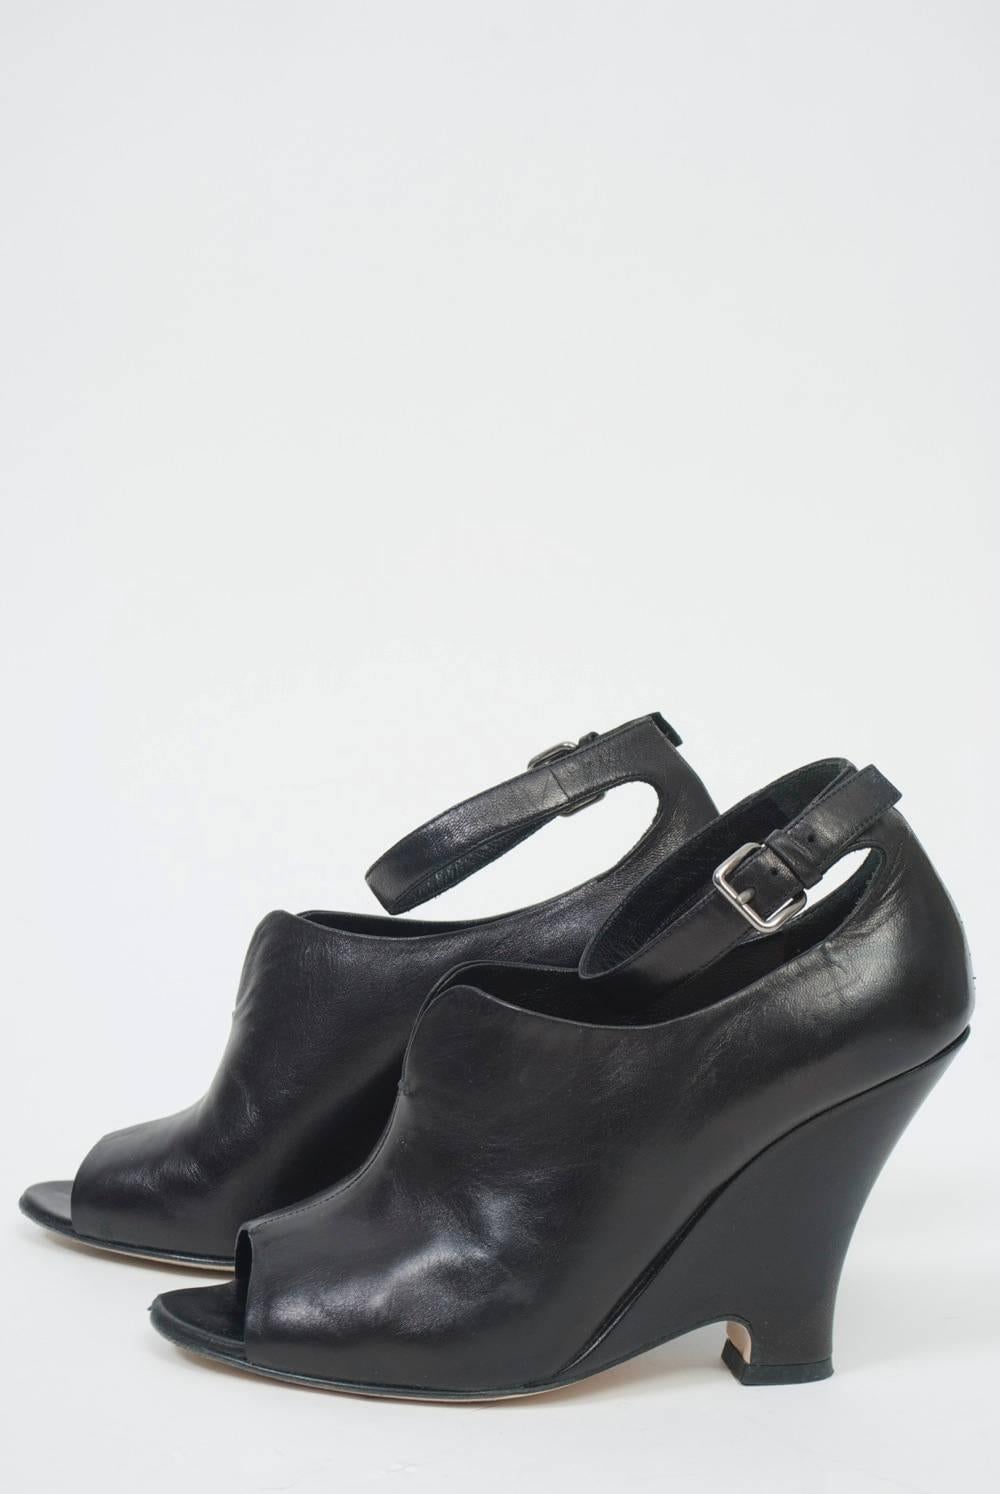 Women's Miu Miu Black Leather Shoes